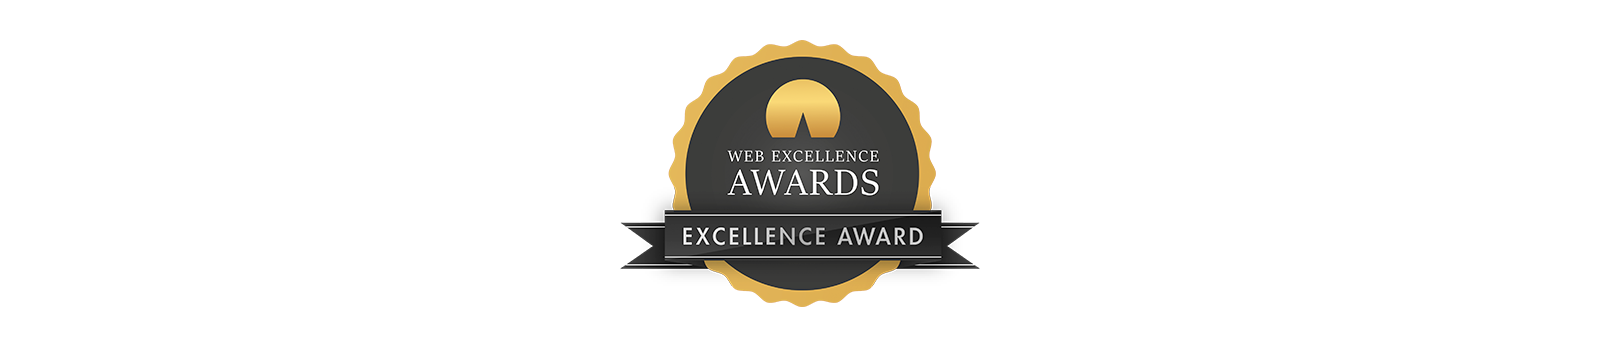 Web excellence award winner